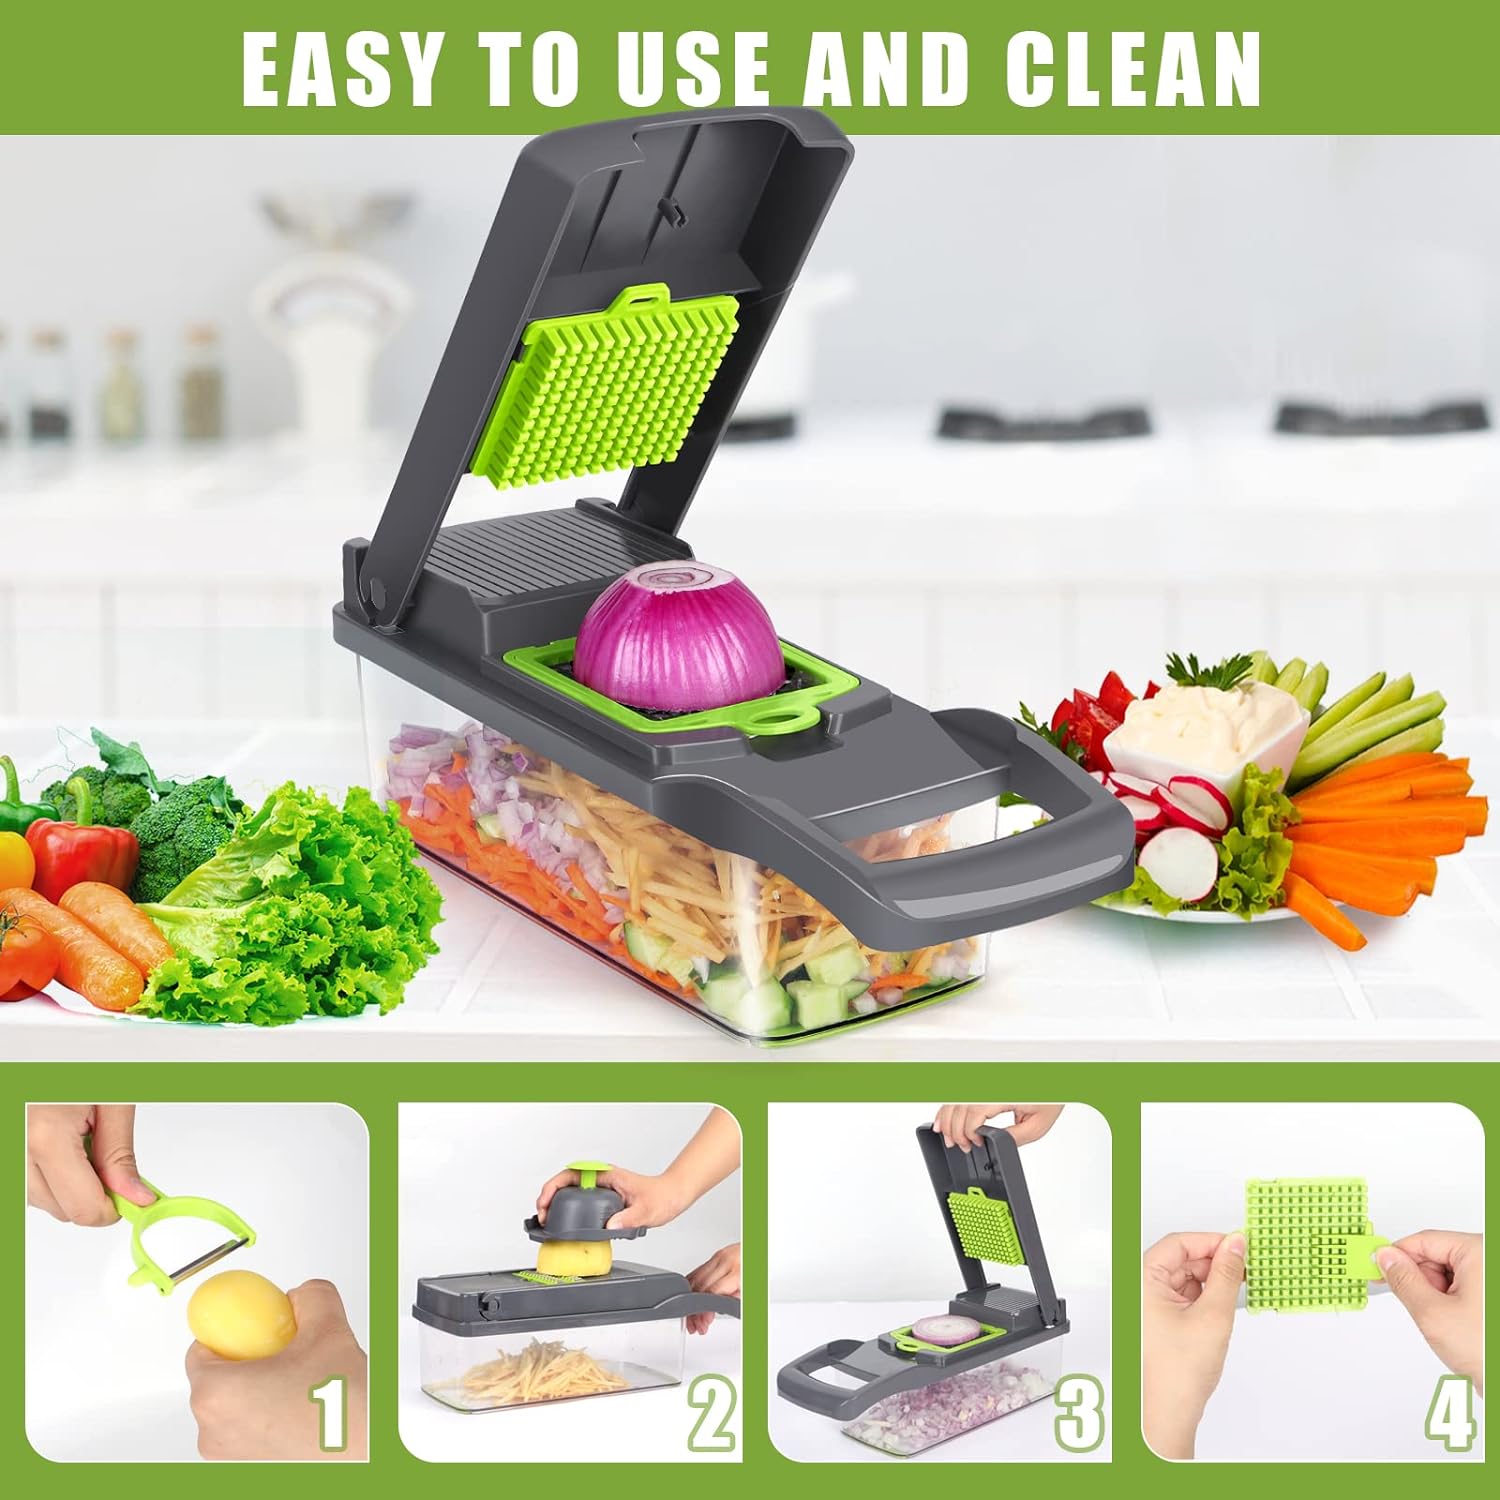 

Vegetable Chopper, Pro Onion Chopper, Multifunctional Food Chopper, Kitchen Vegetable Slicer Dicer Cutter